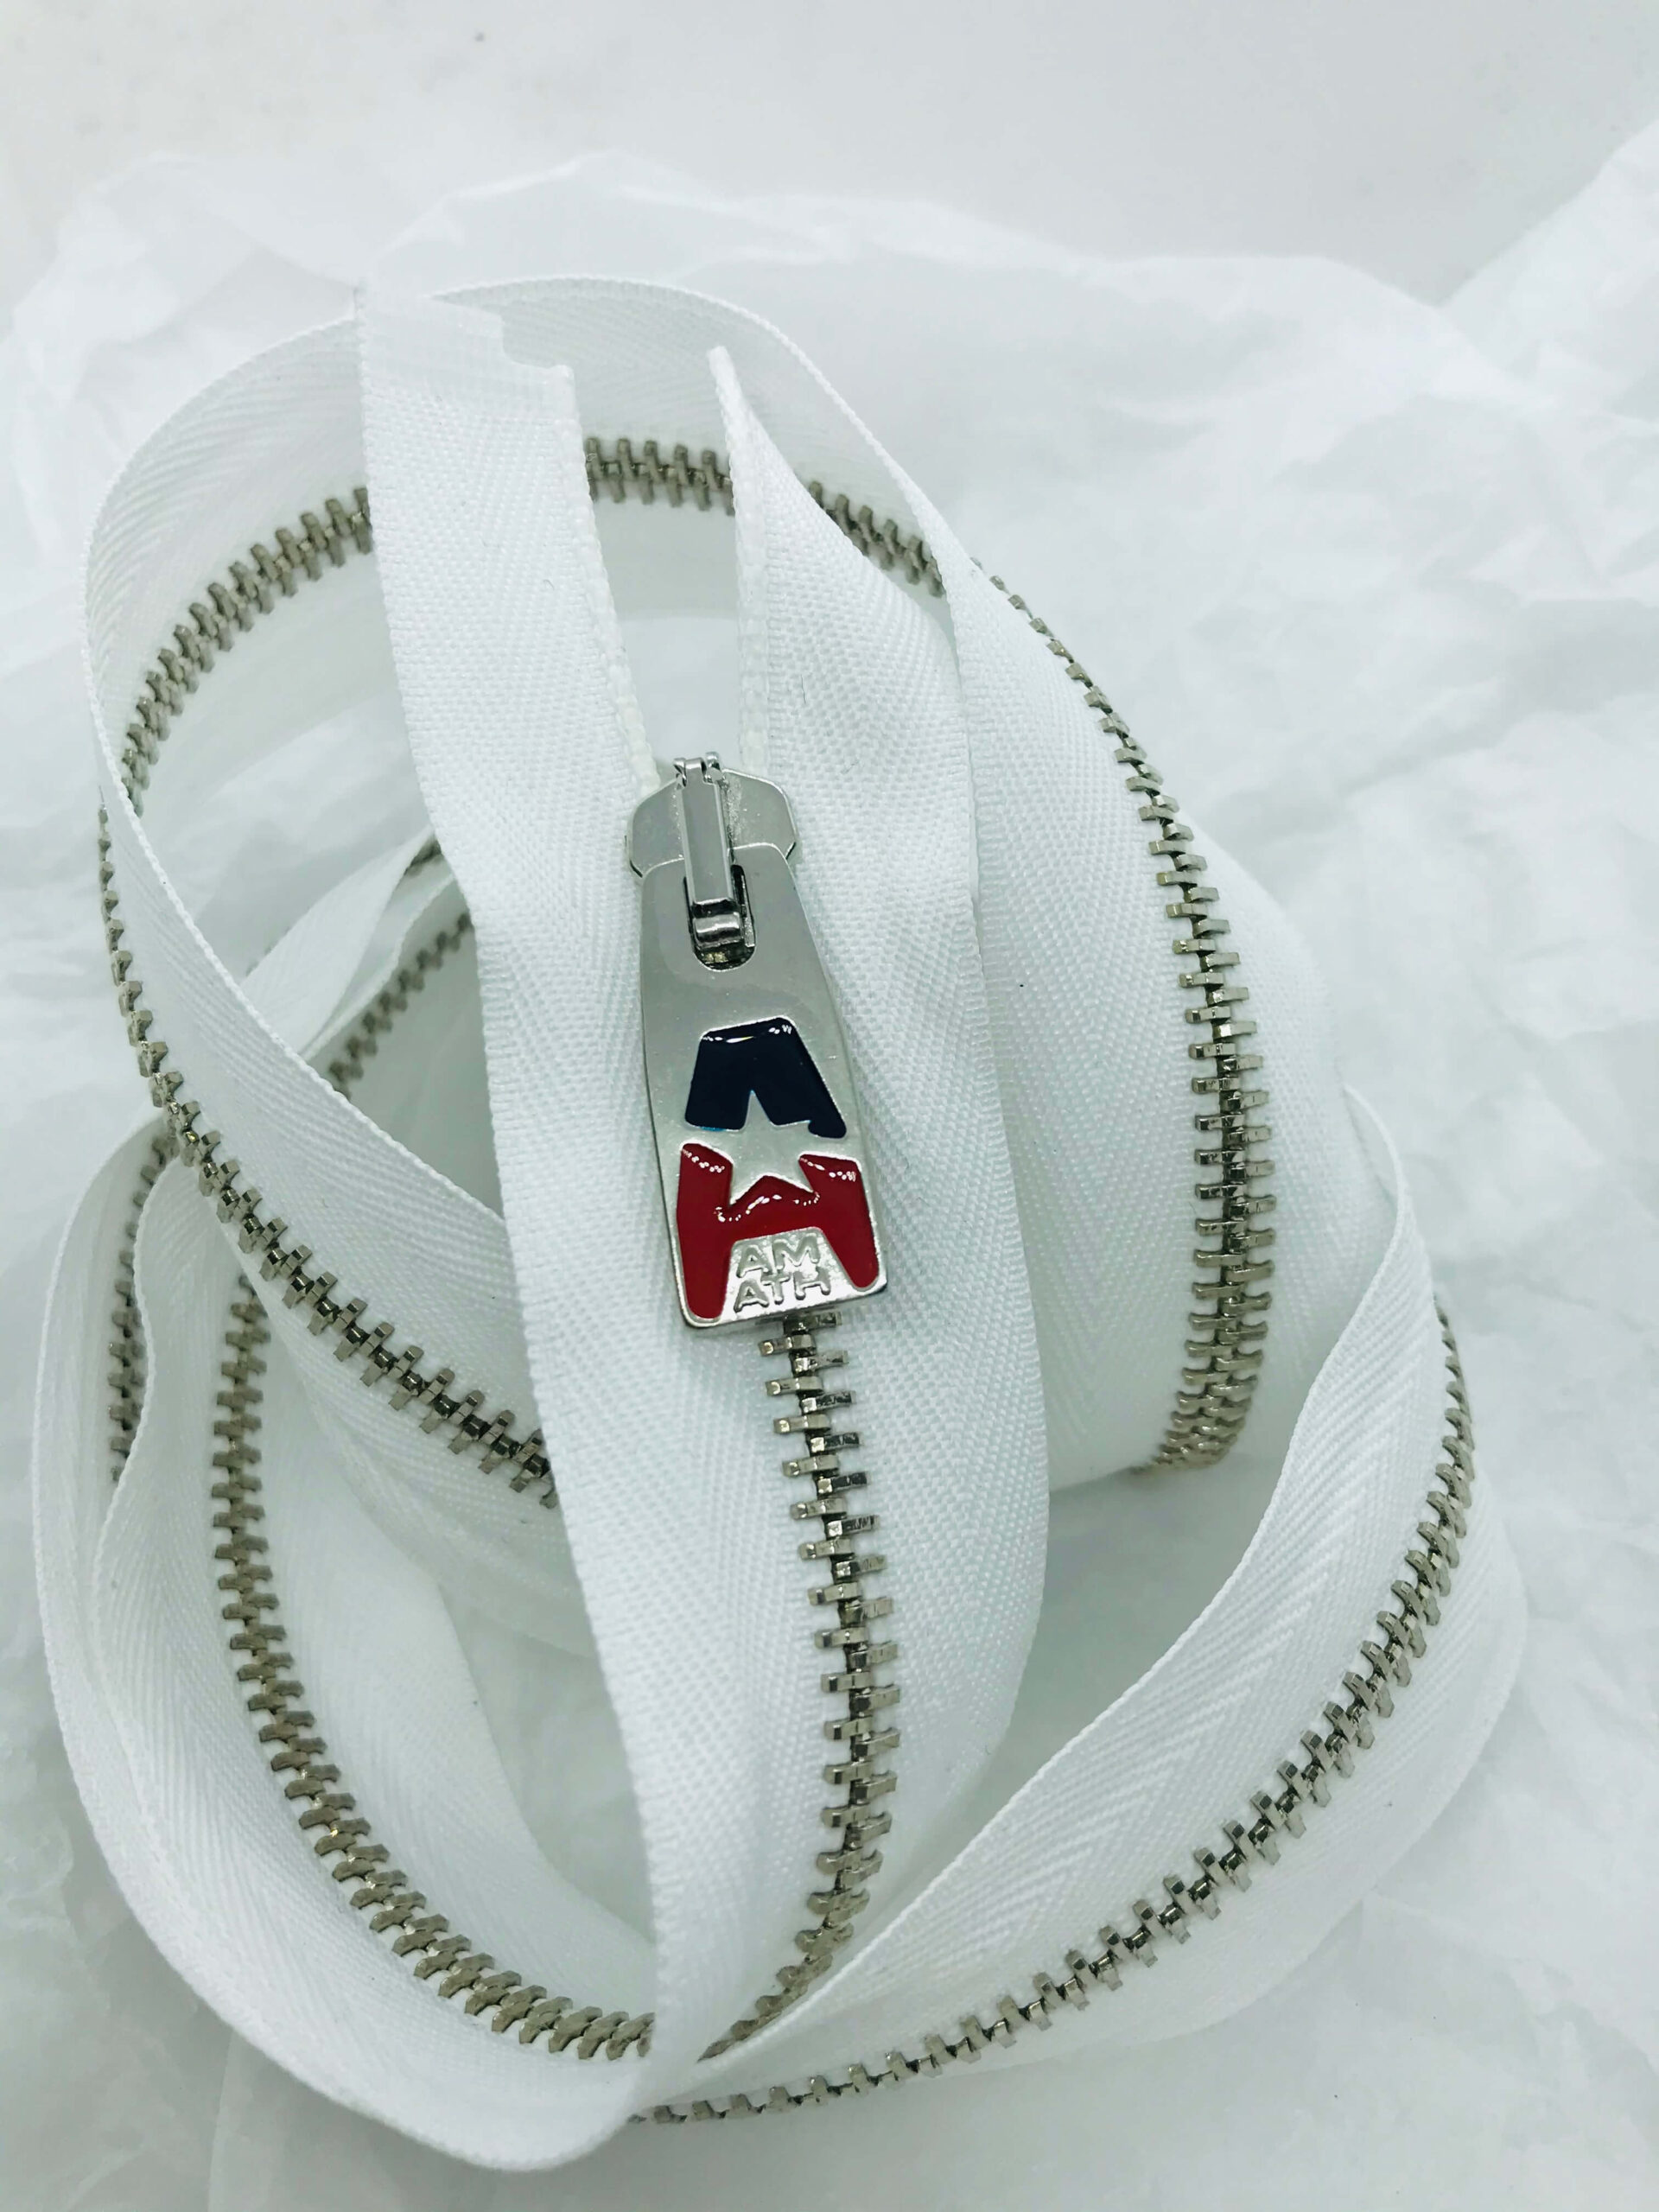 Indispensable Part of Minimalist Style: Metal Zipper Details